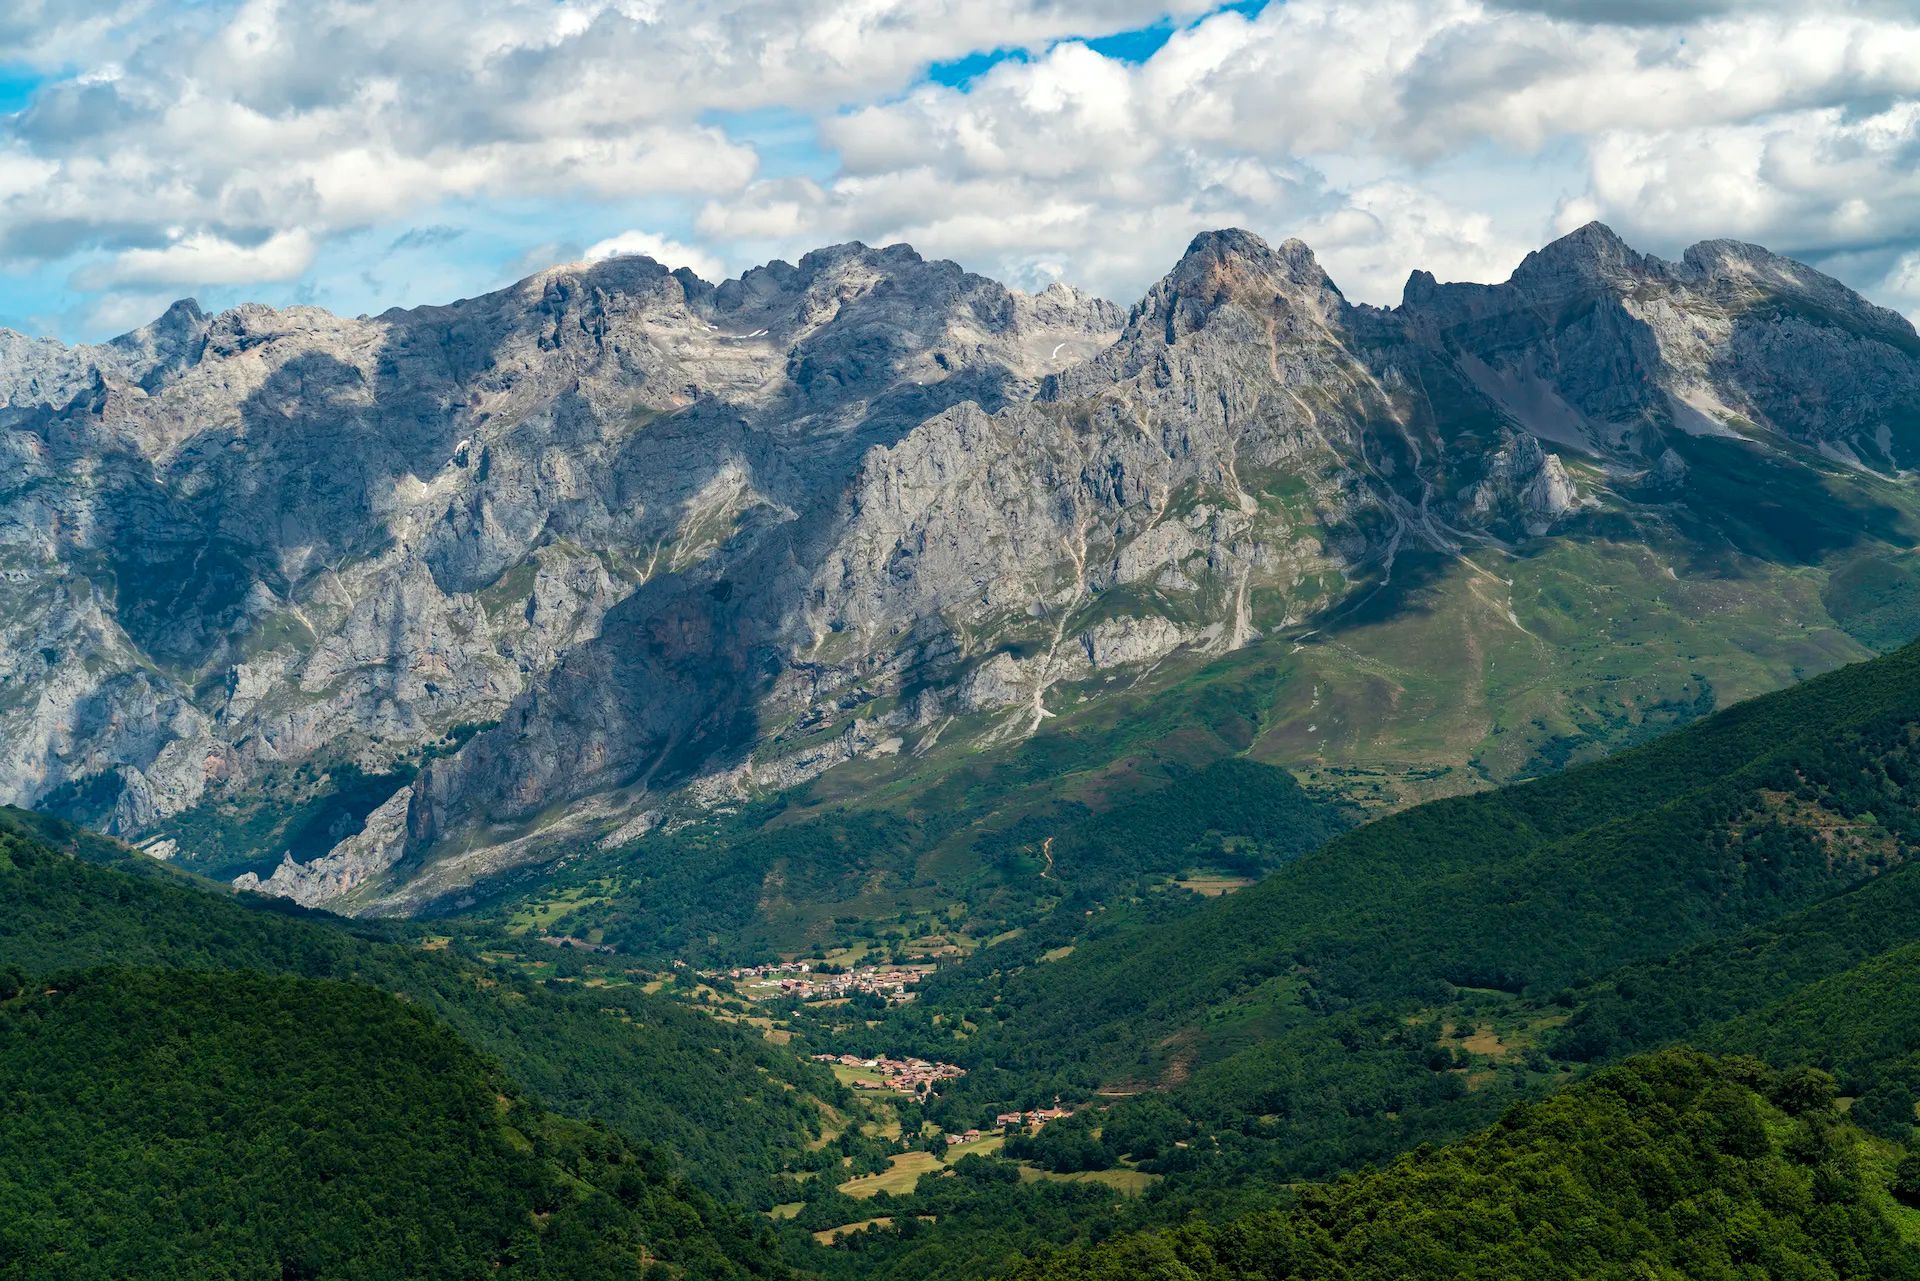 The high limestone mountains of the Picos de Europa National Park.